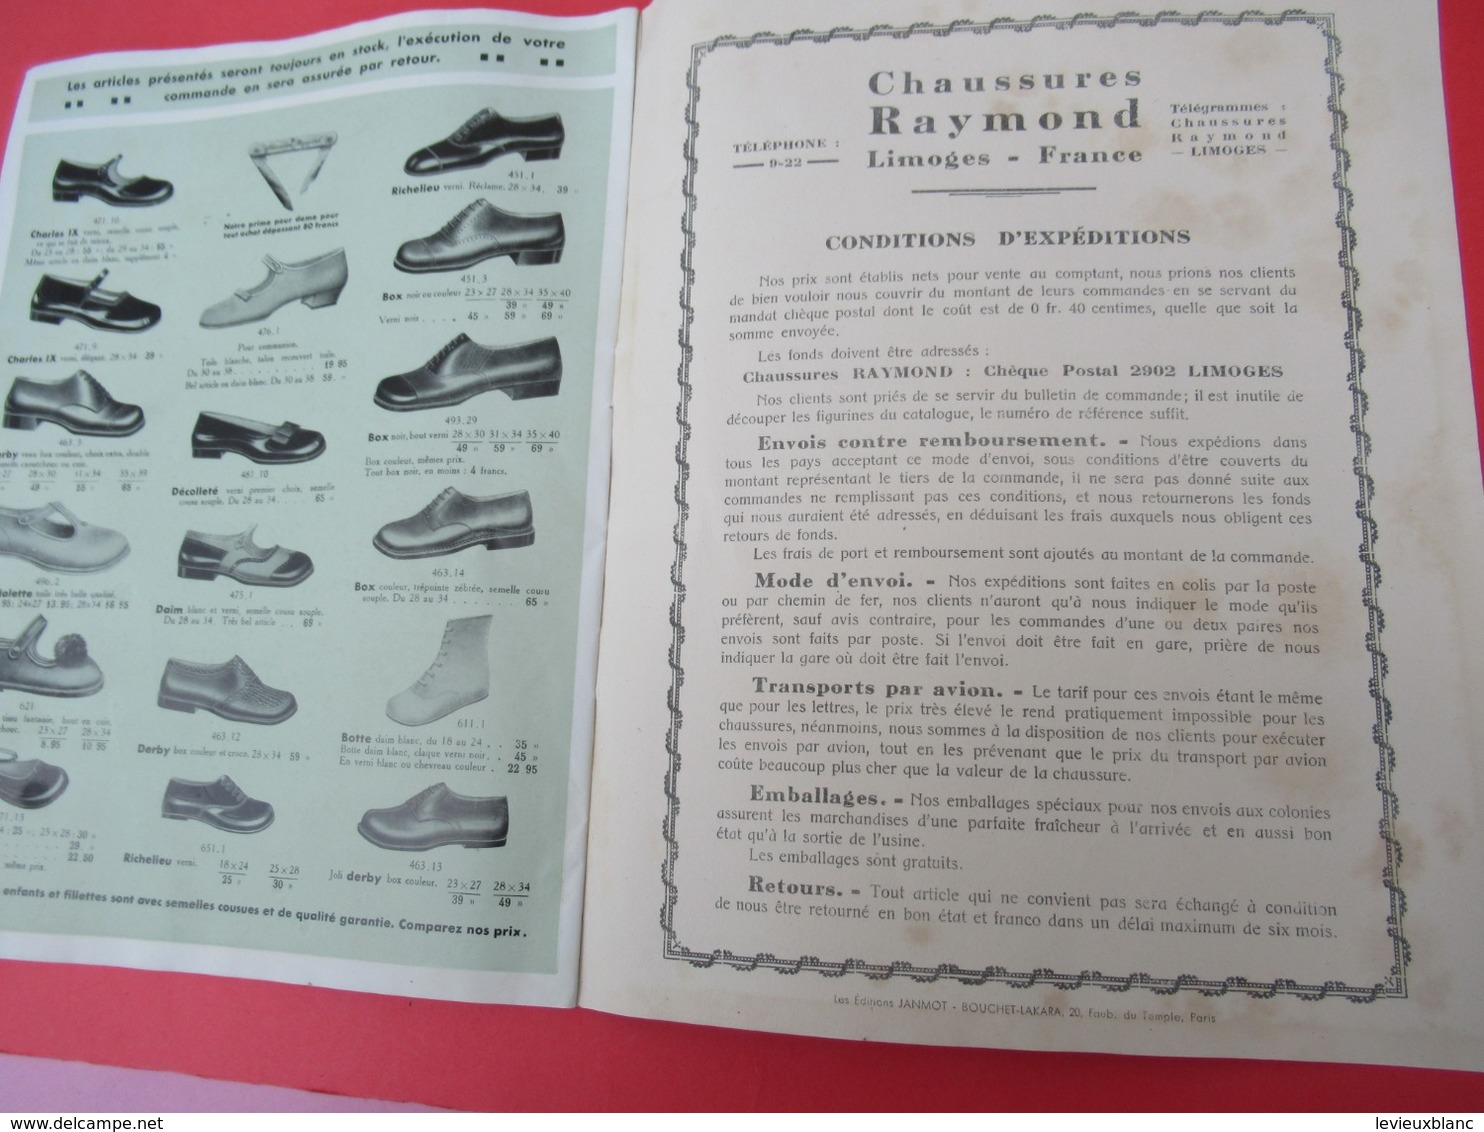 Catalogue-Tarif/ Habillement/ Chaussures/ Chaussures RAYMOND/Limoges - Poitiers/Chausse le Monde entier/1932   CAT254